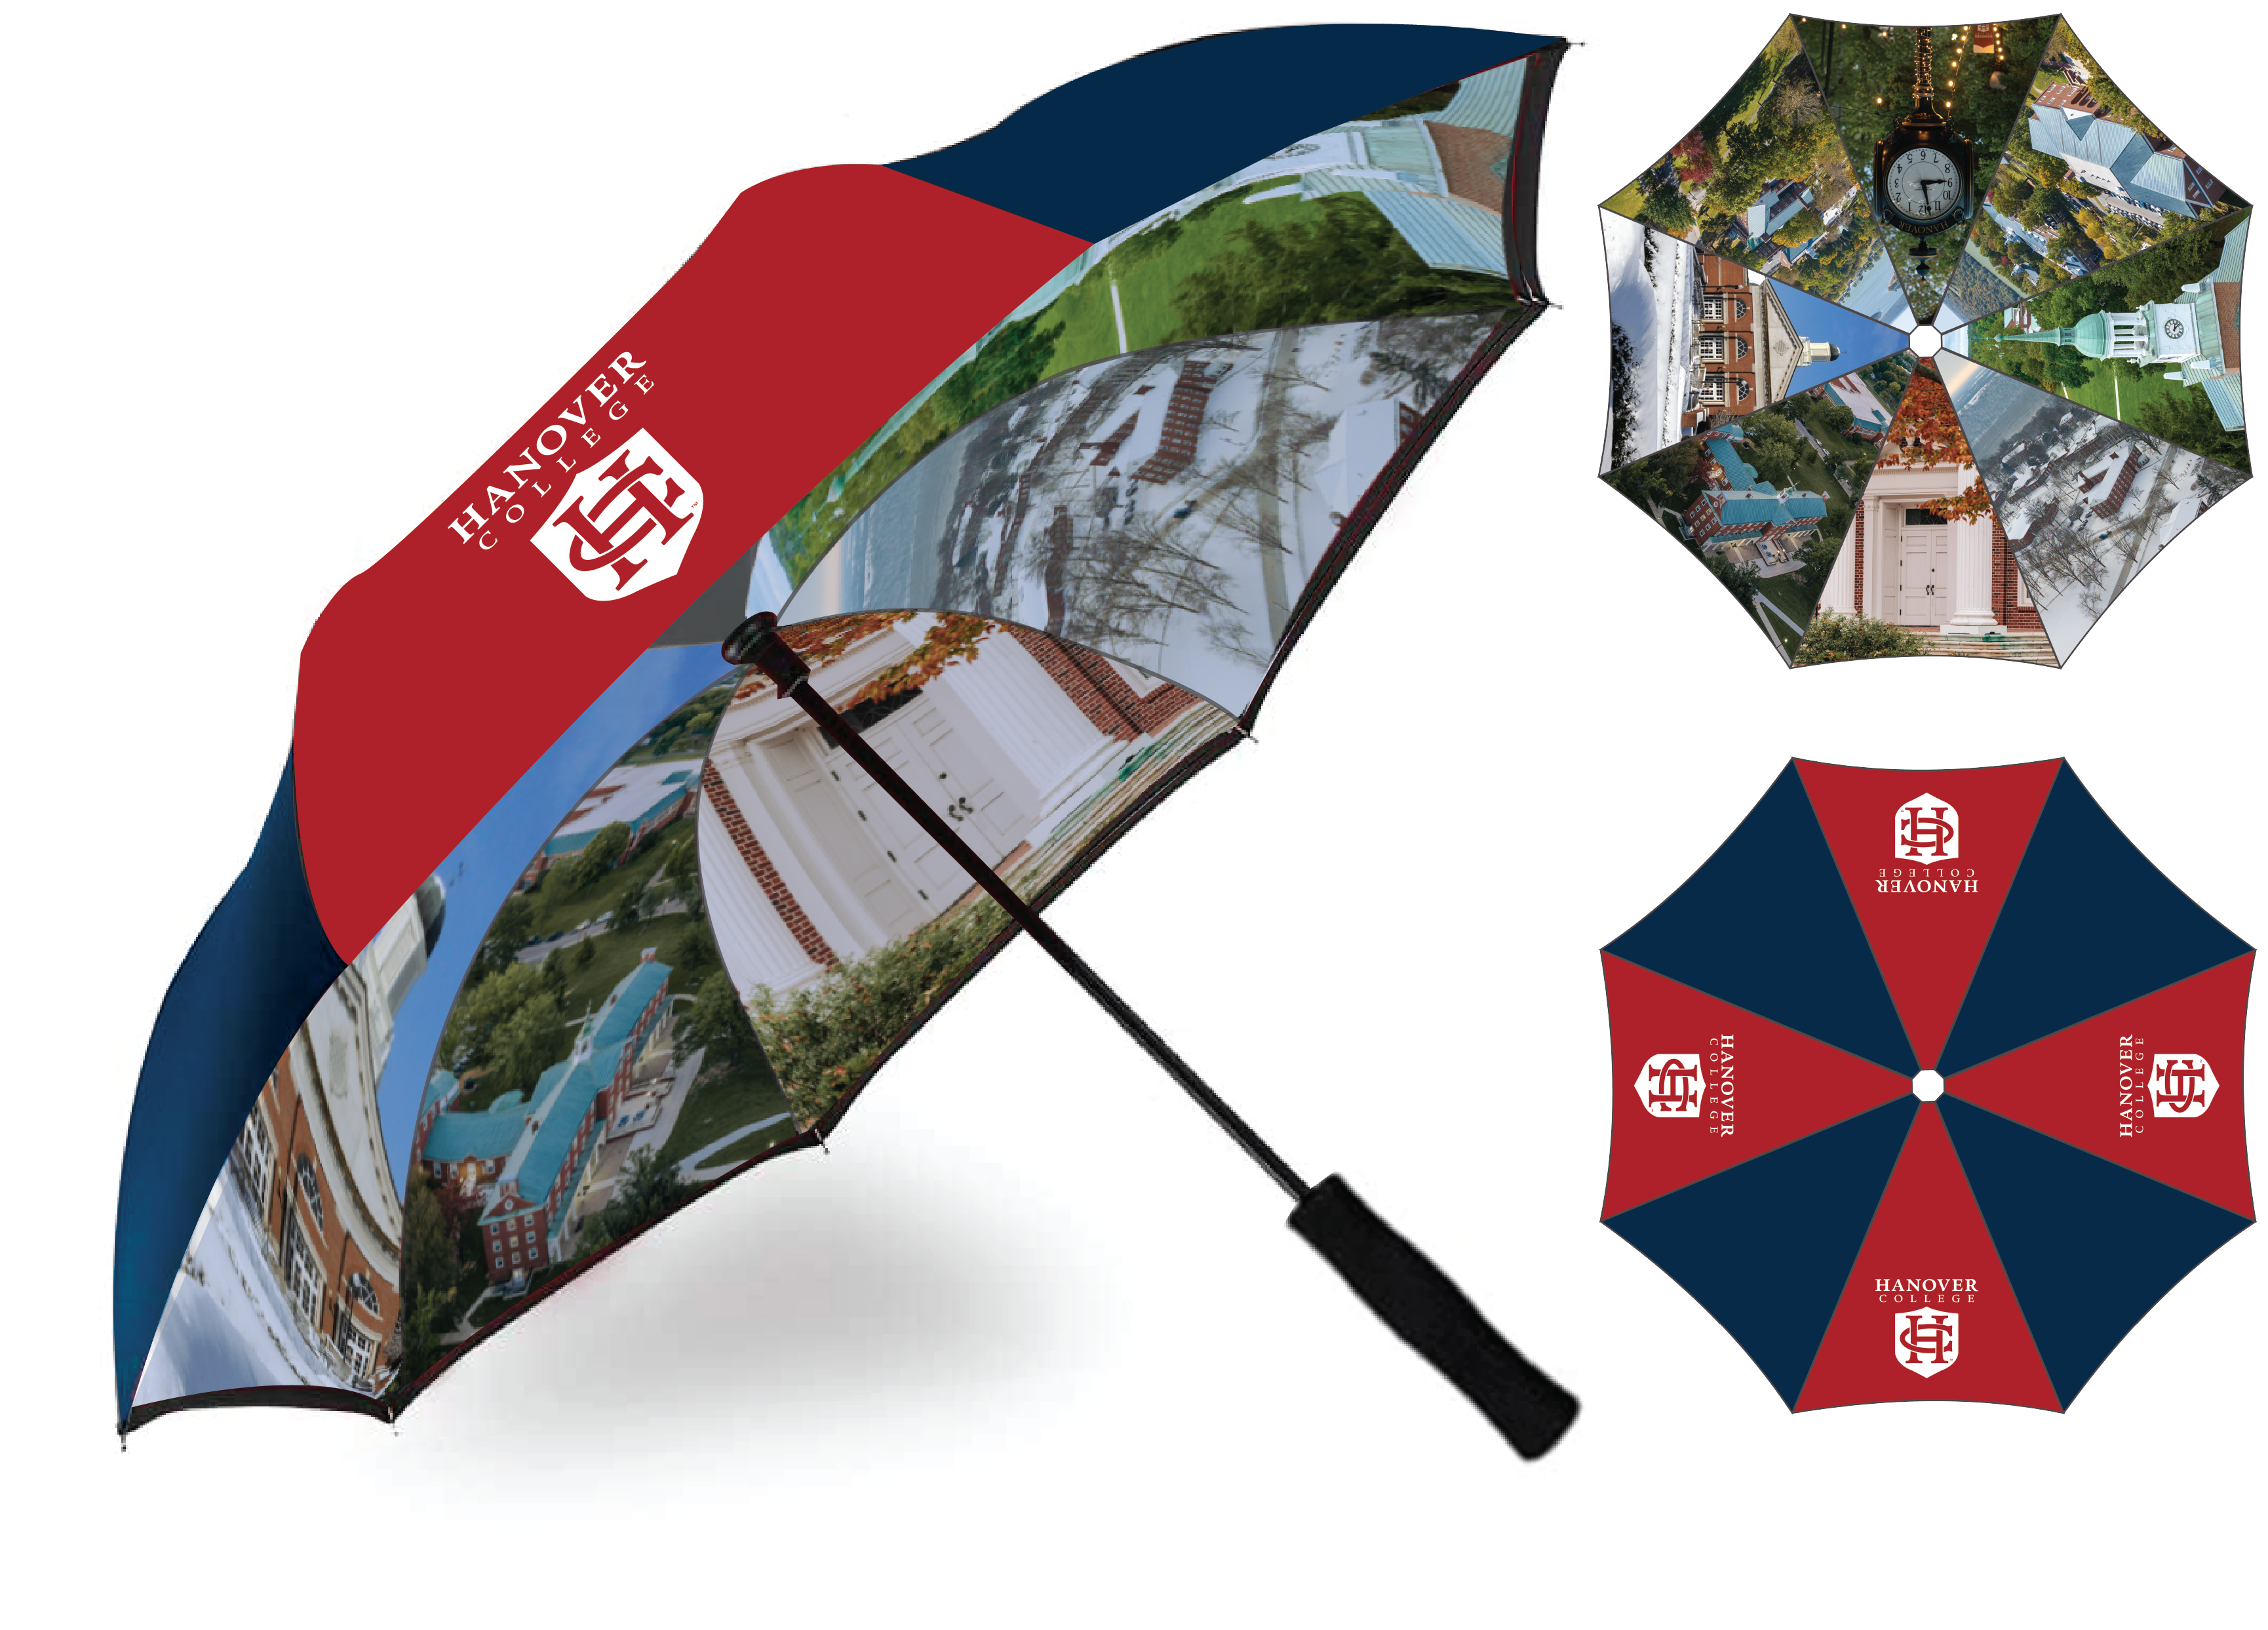 A custom Hanover College Umbrella